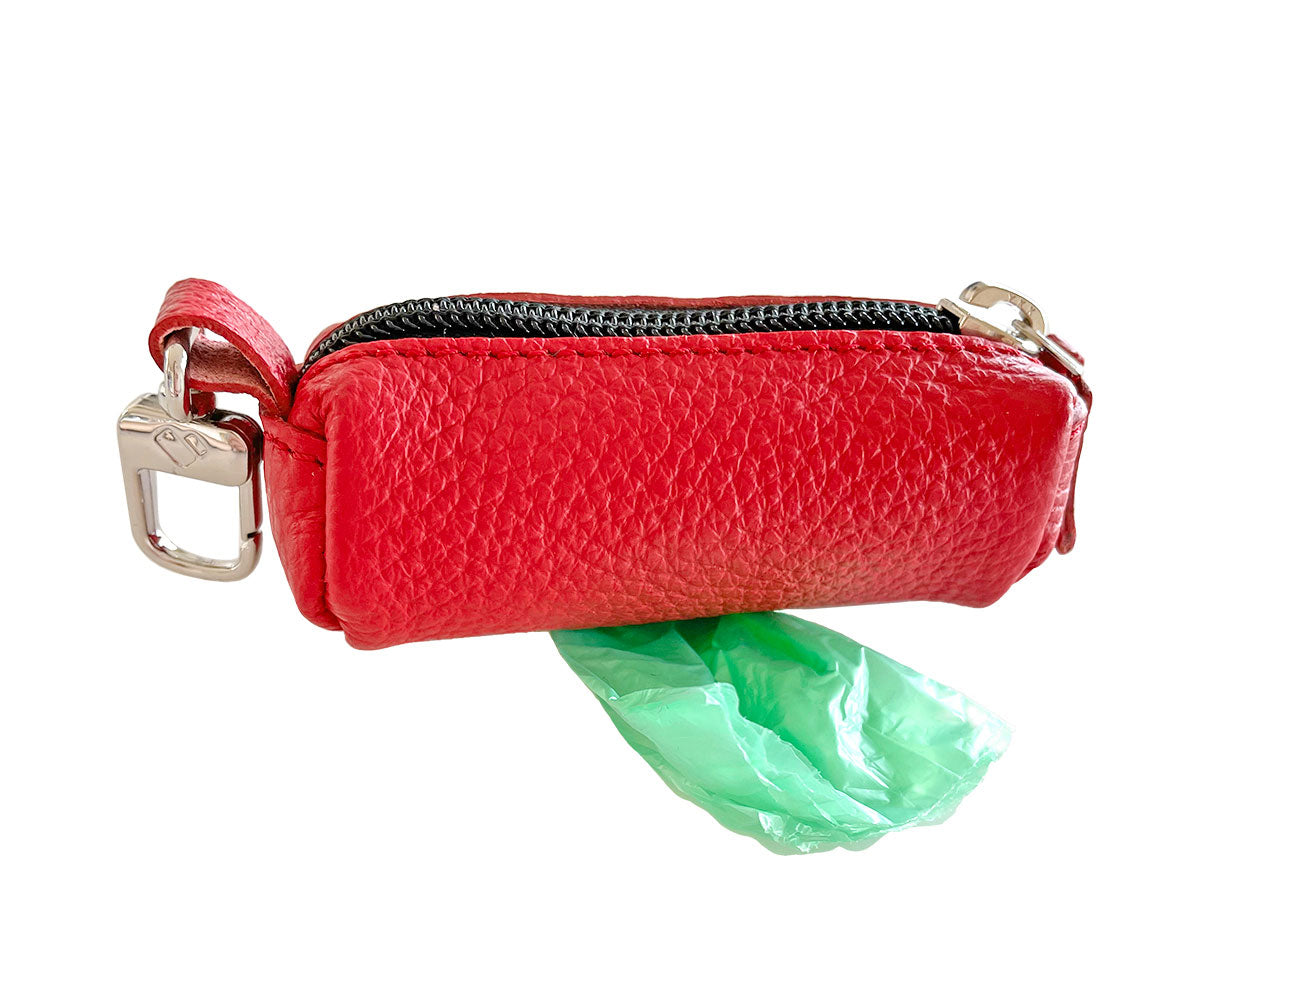 minibag poo doggy-bag, rotes Täschchen für Hundesackerl, Accessoires für Hunde, minibag for dogs